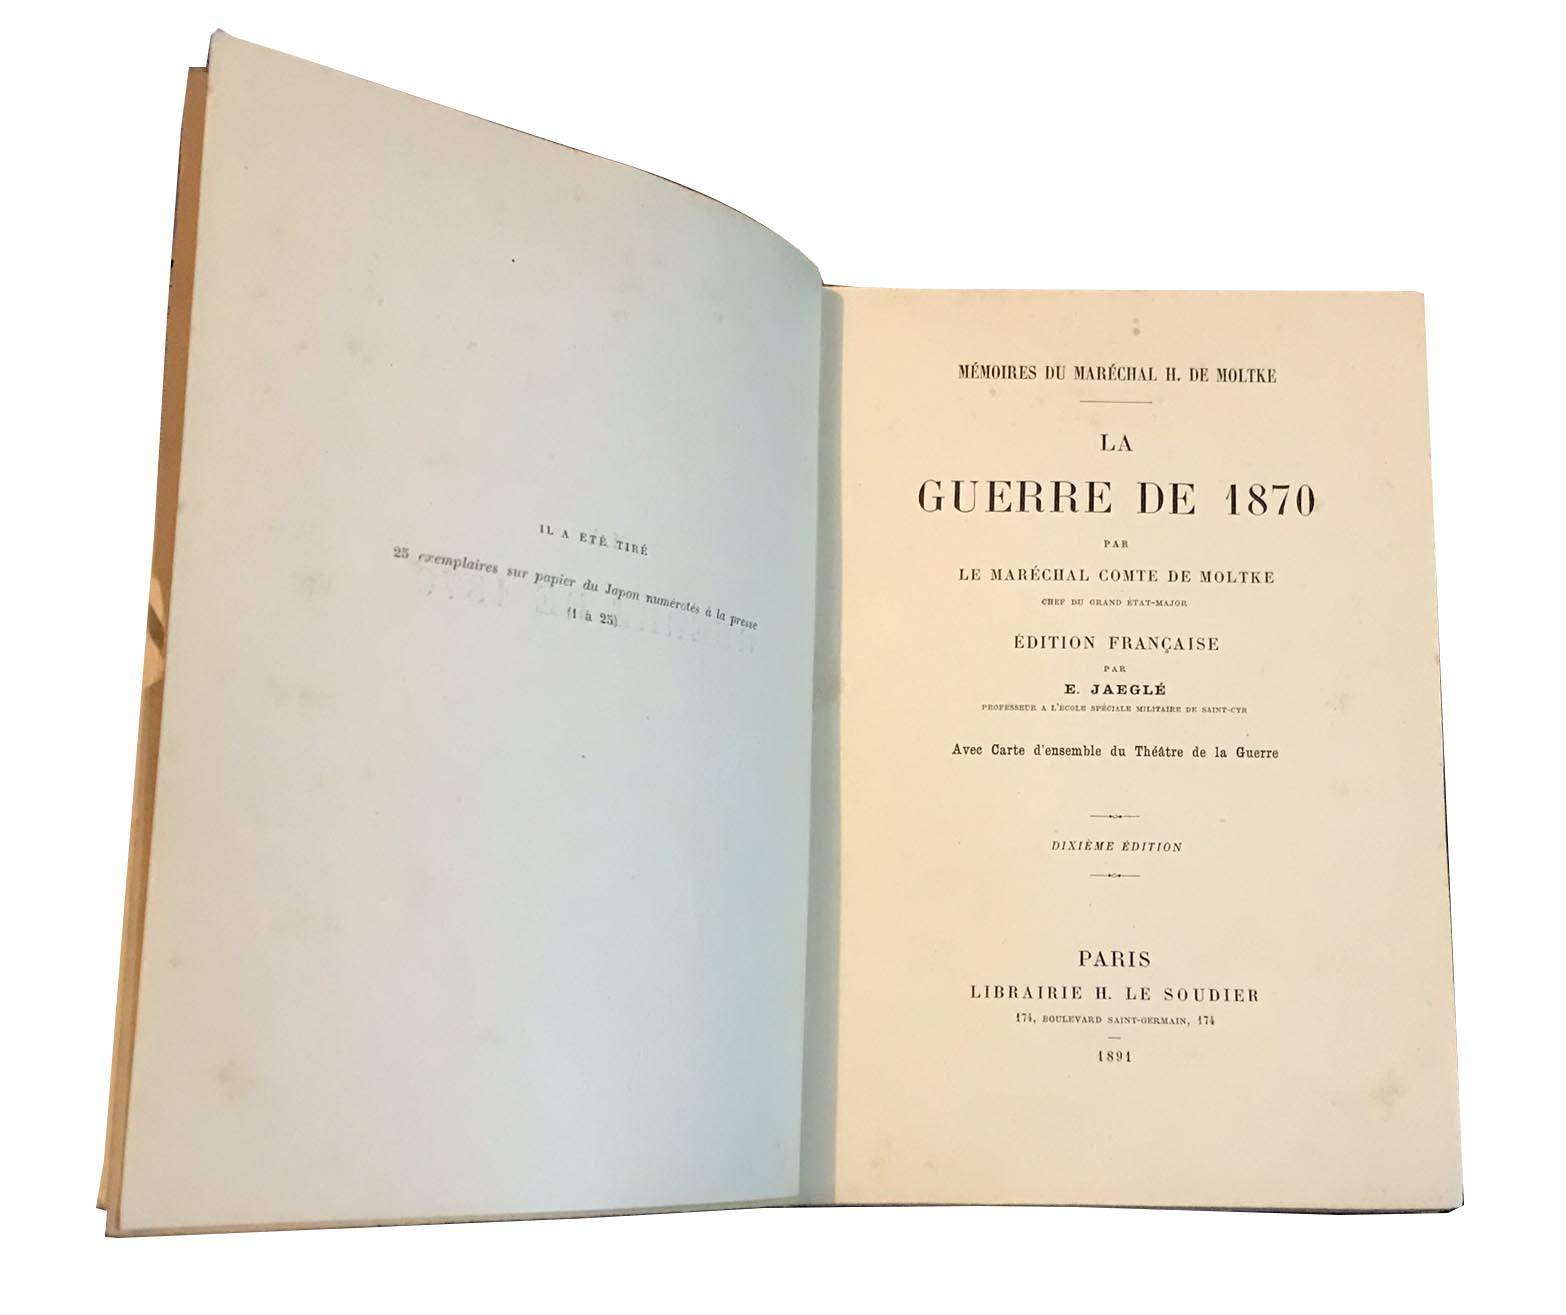 LaA GUERRE DE 1870 by H DE Moltke